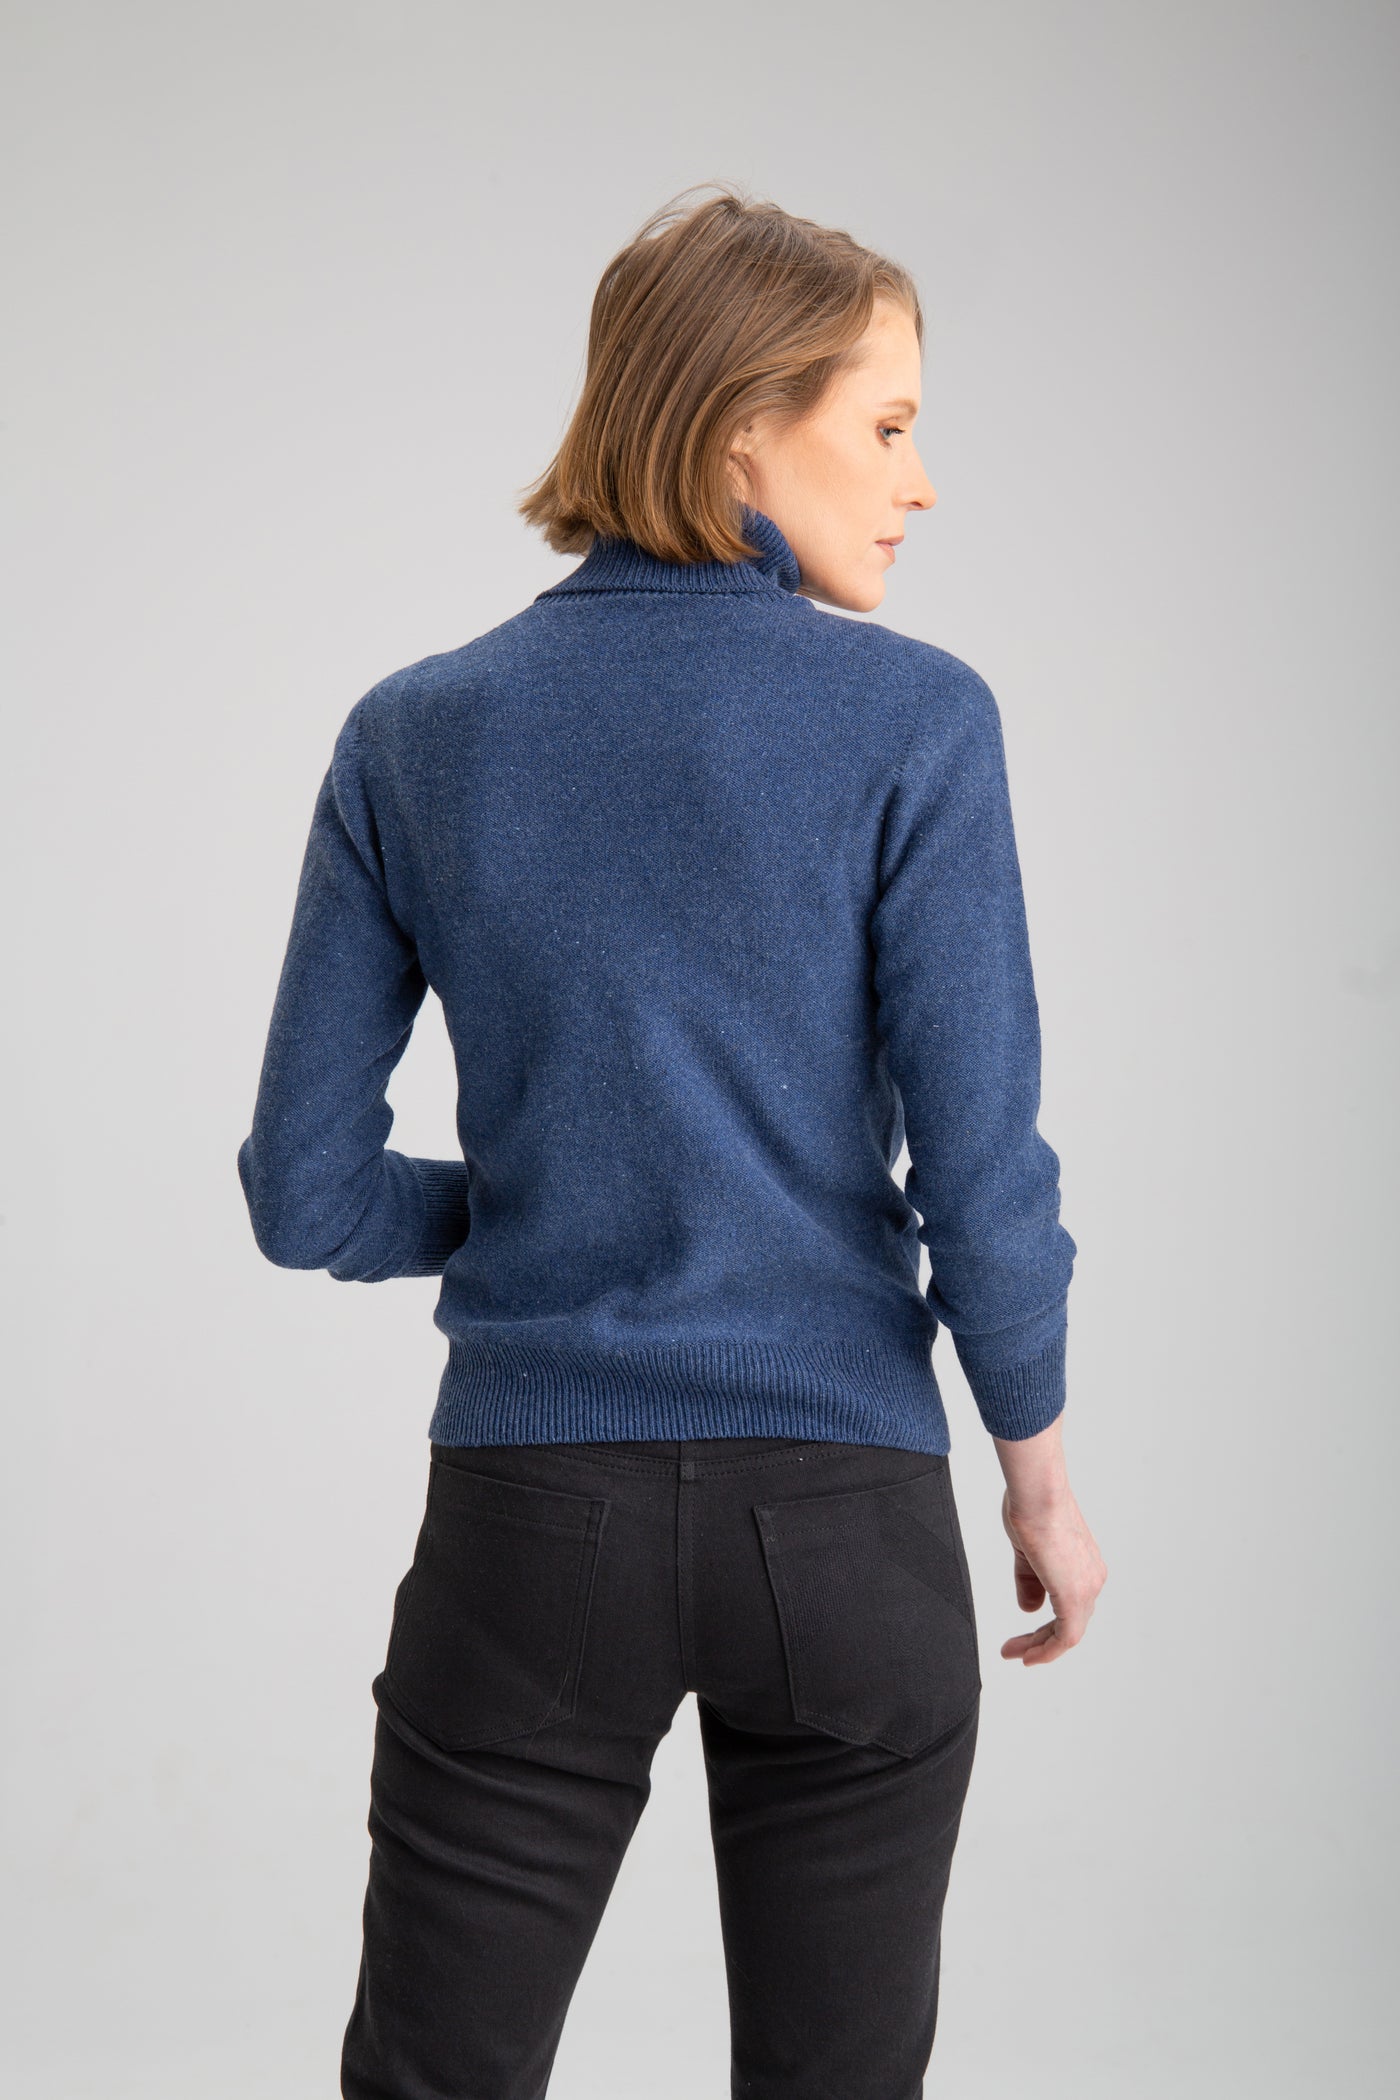 Women's seamless turtleneck sweater | Dark blue